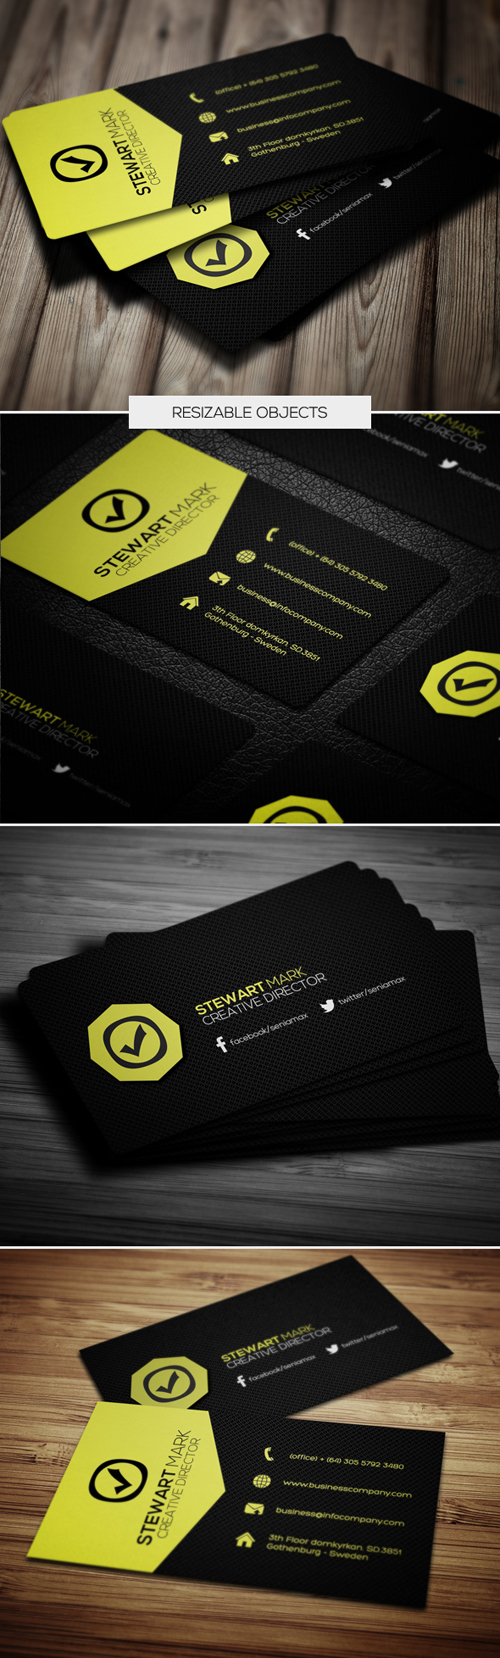 business cards template design - 7